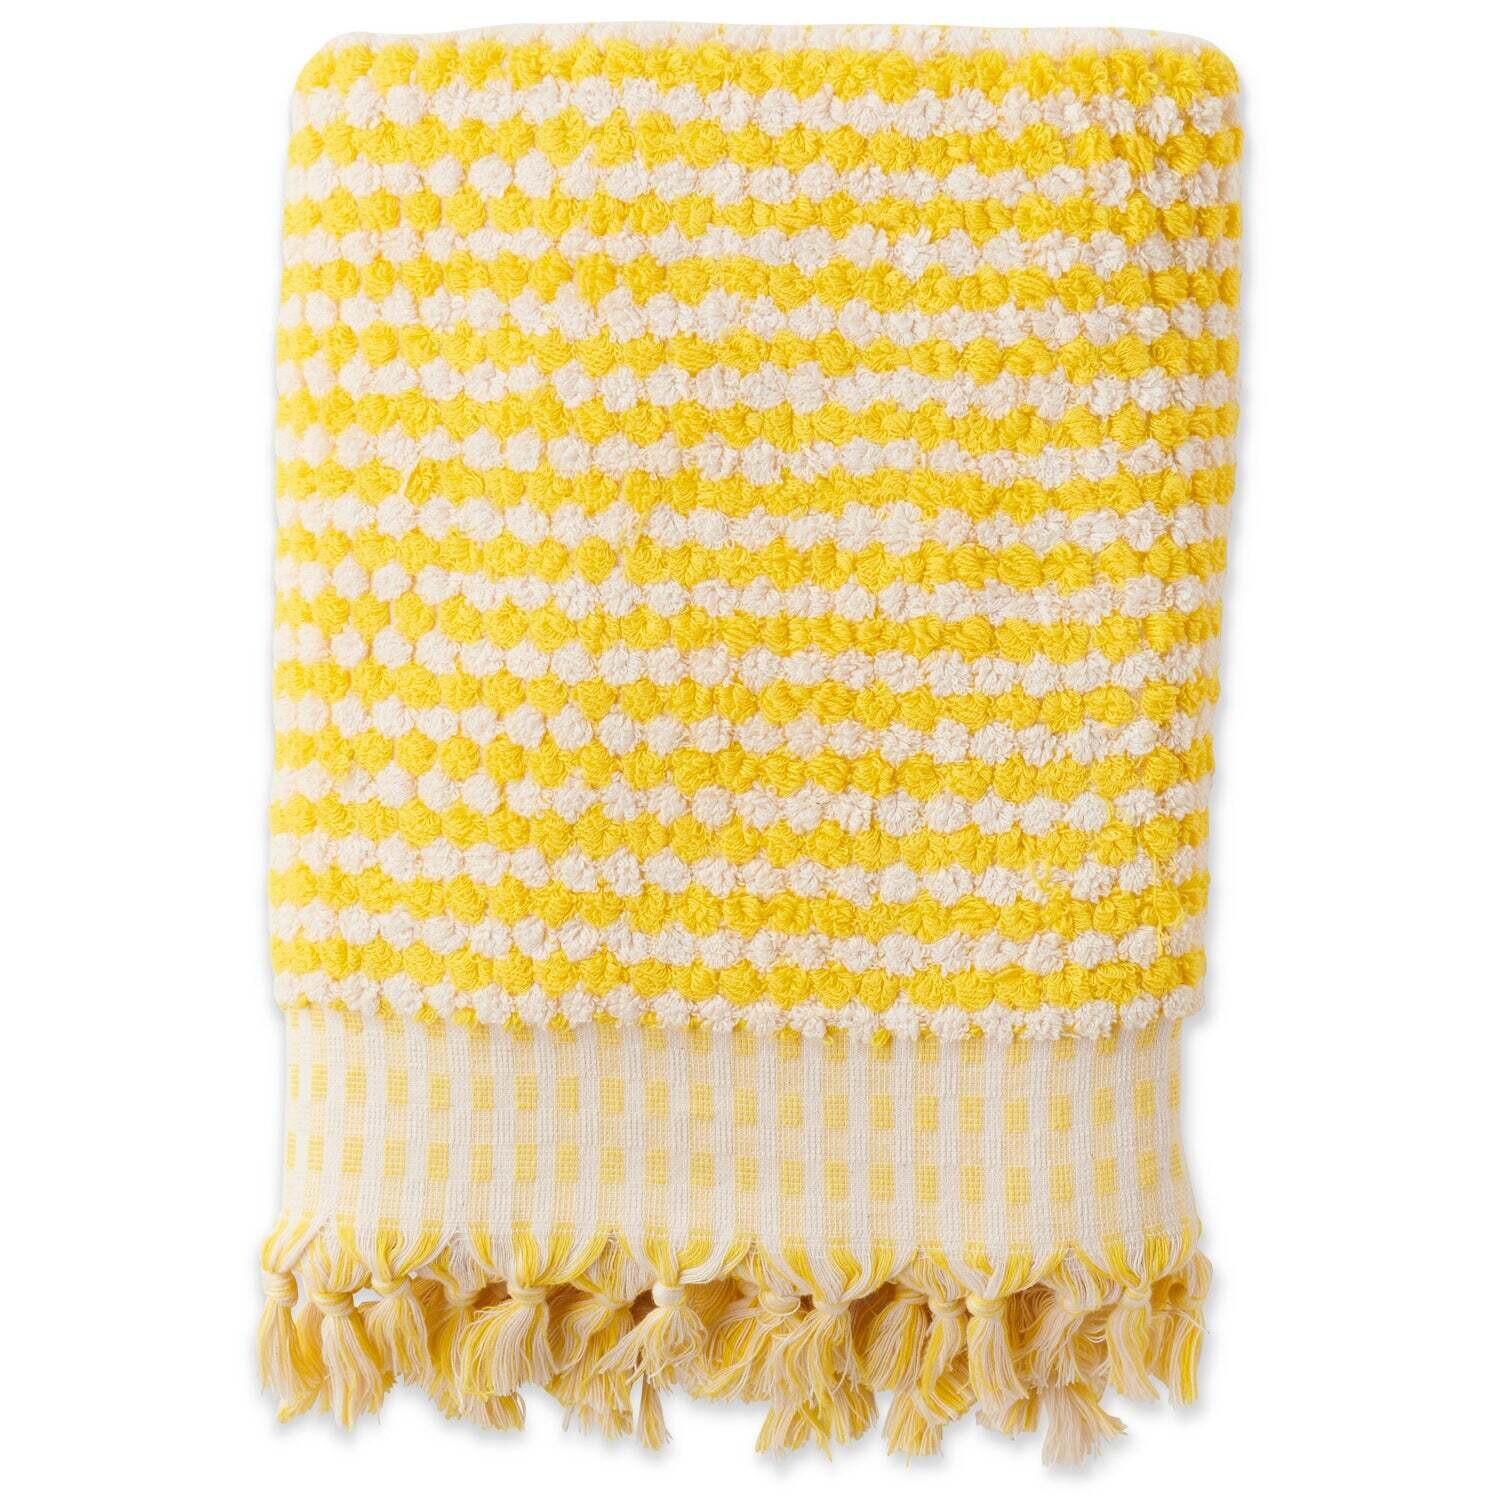 Turkish Towels - Bath Towel - Lemon Drops